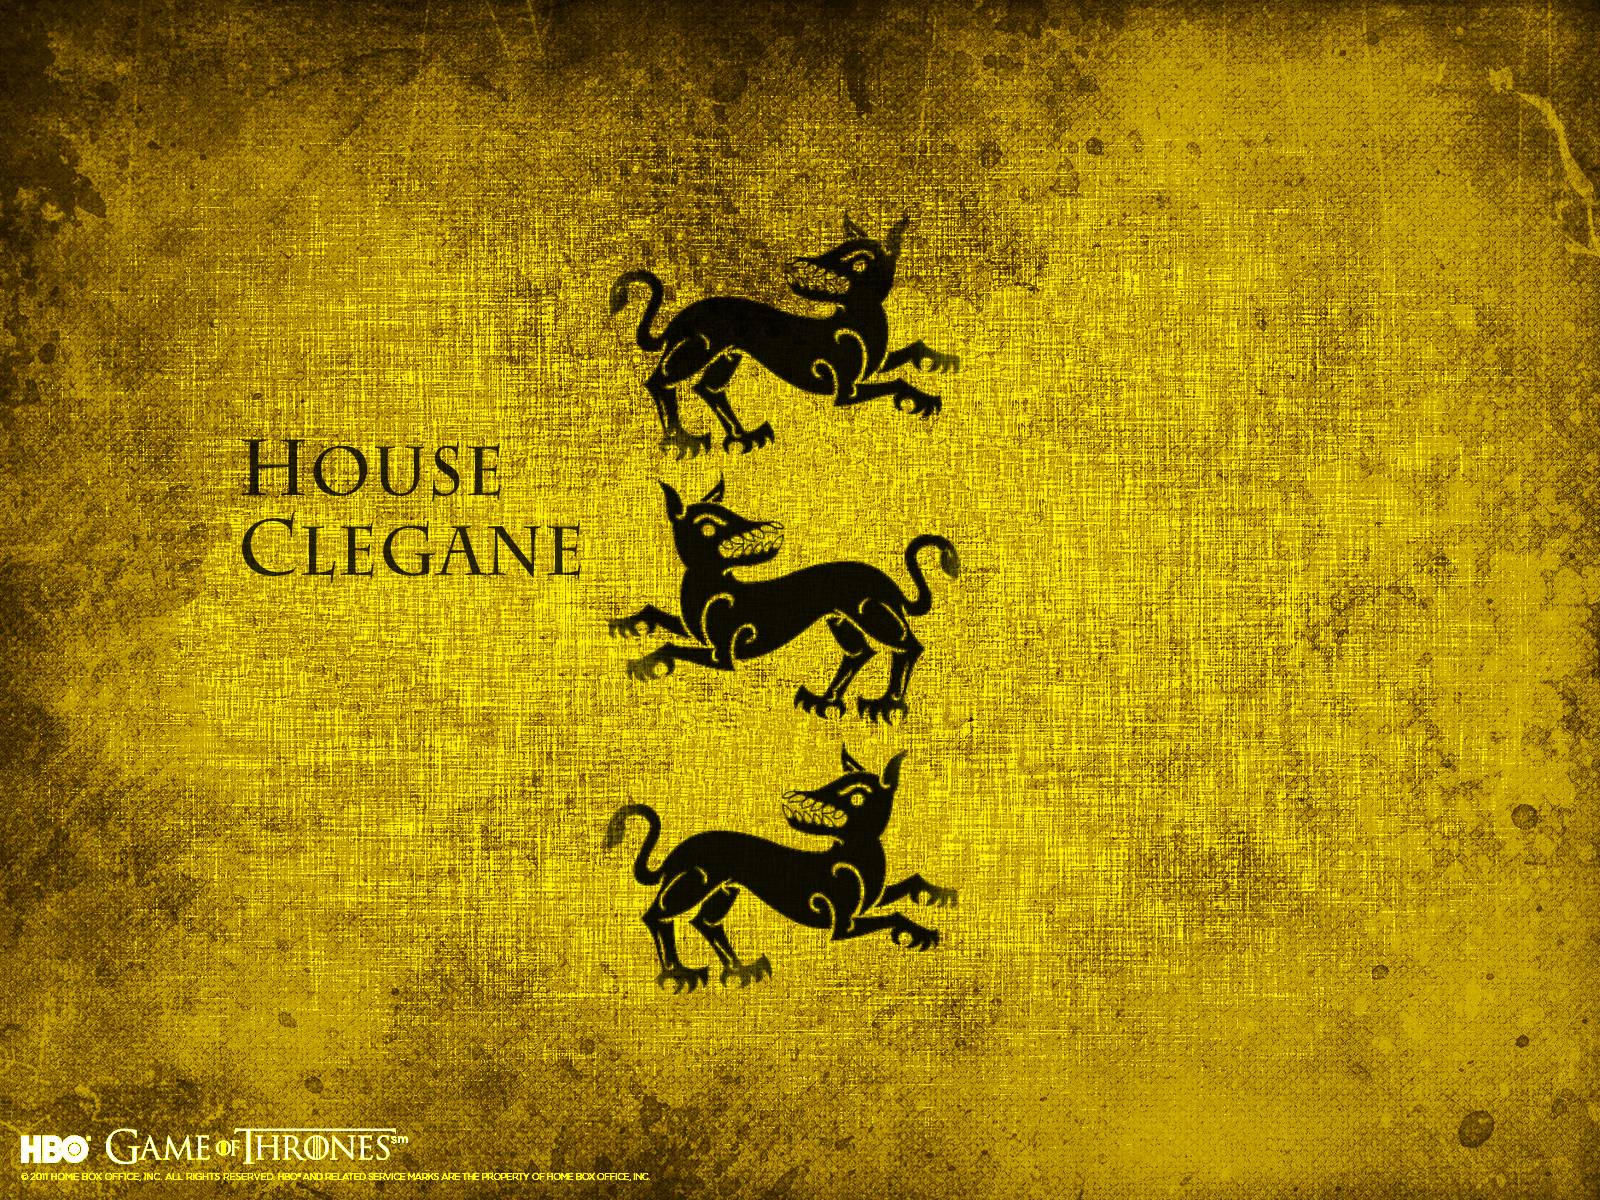 House Clegane of Thrones Wallpaper